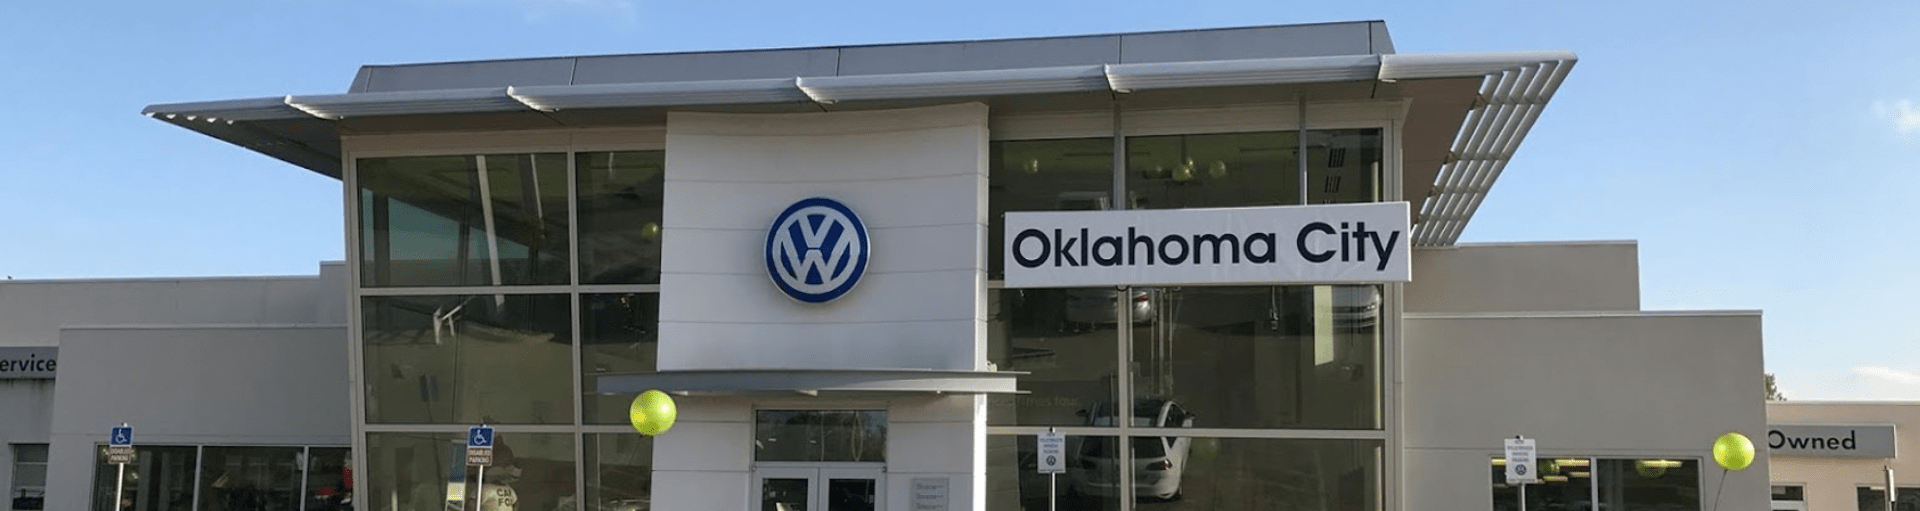 Oklahoma City Volkswagen Four-Wheel Alignment